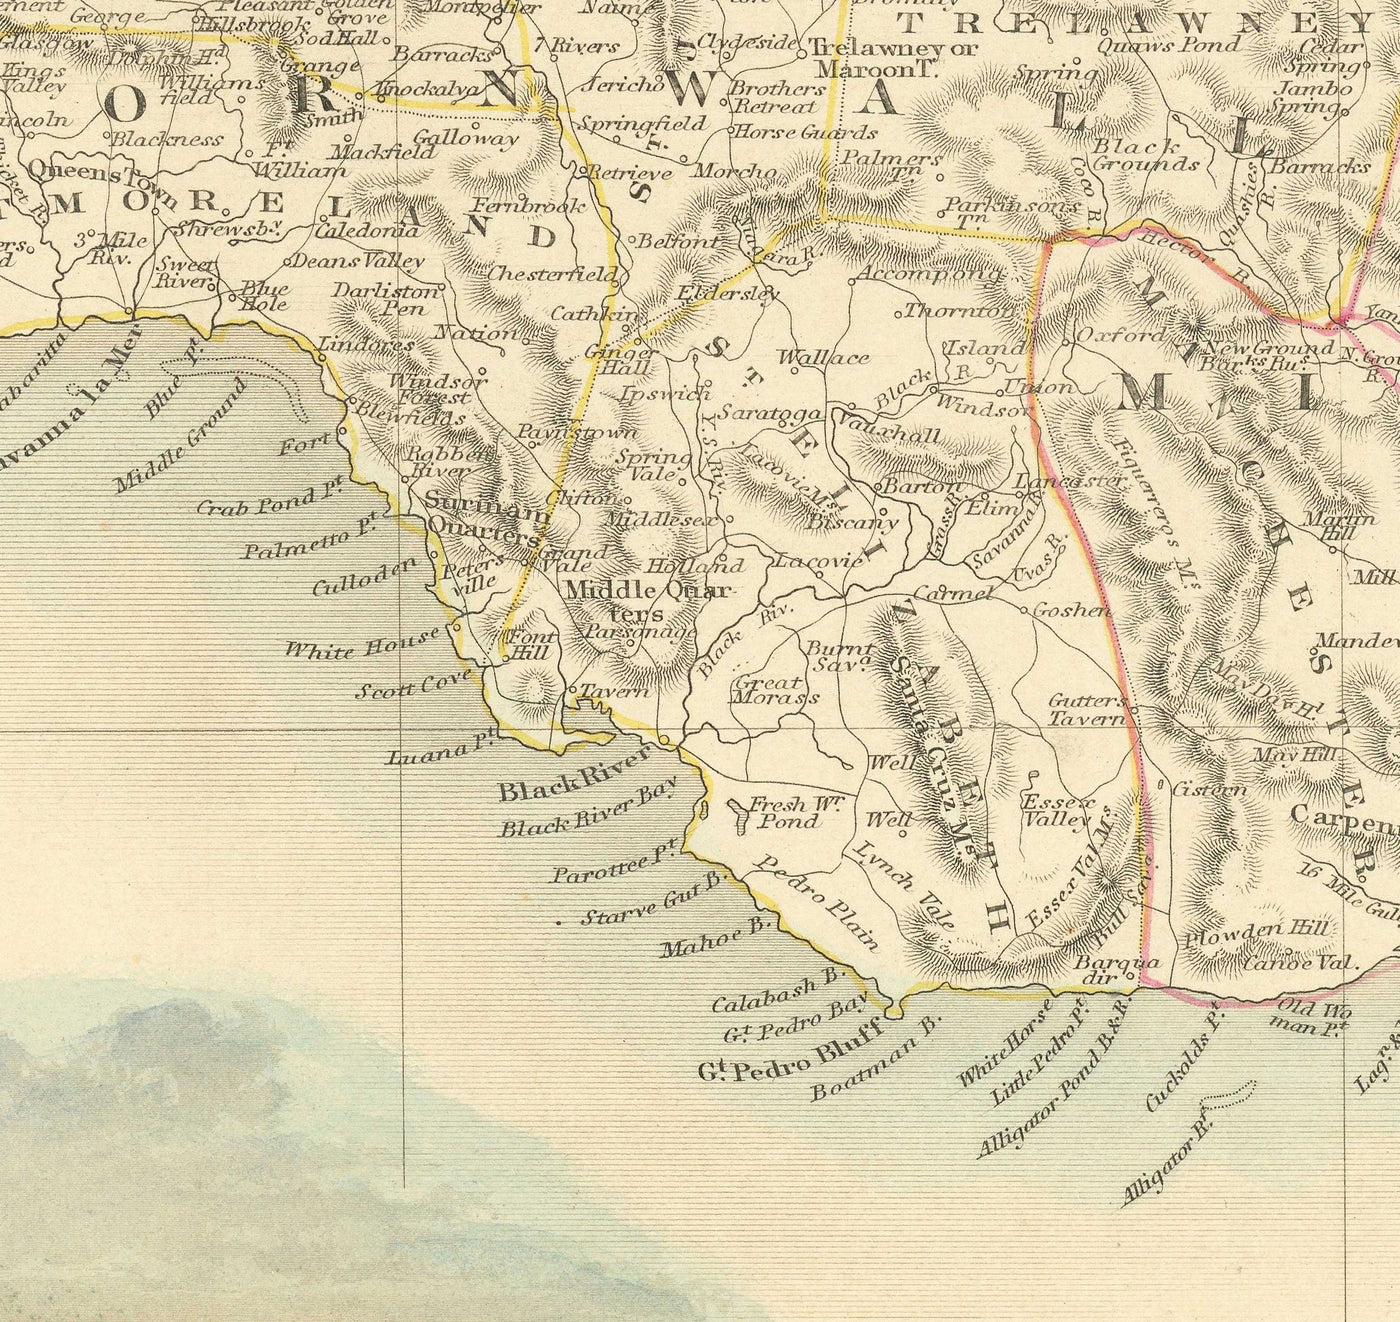 Old Map of Jamaica by Tallis and Rapkin in 1851 - Kingston, Portmore, Montego Bay, Black River, Savanna la Mar